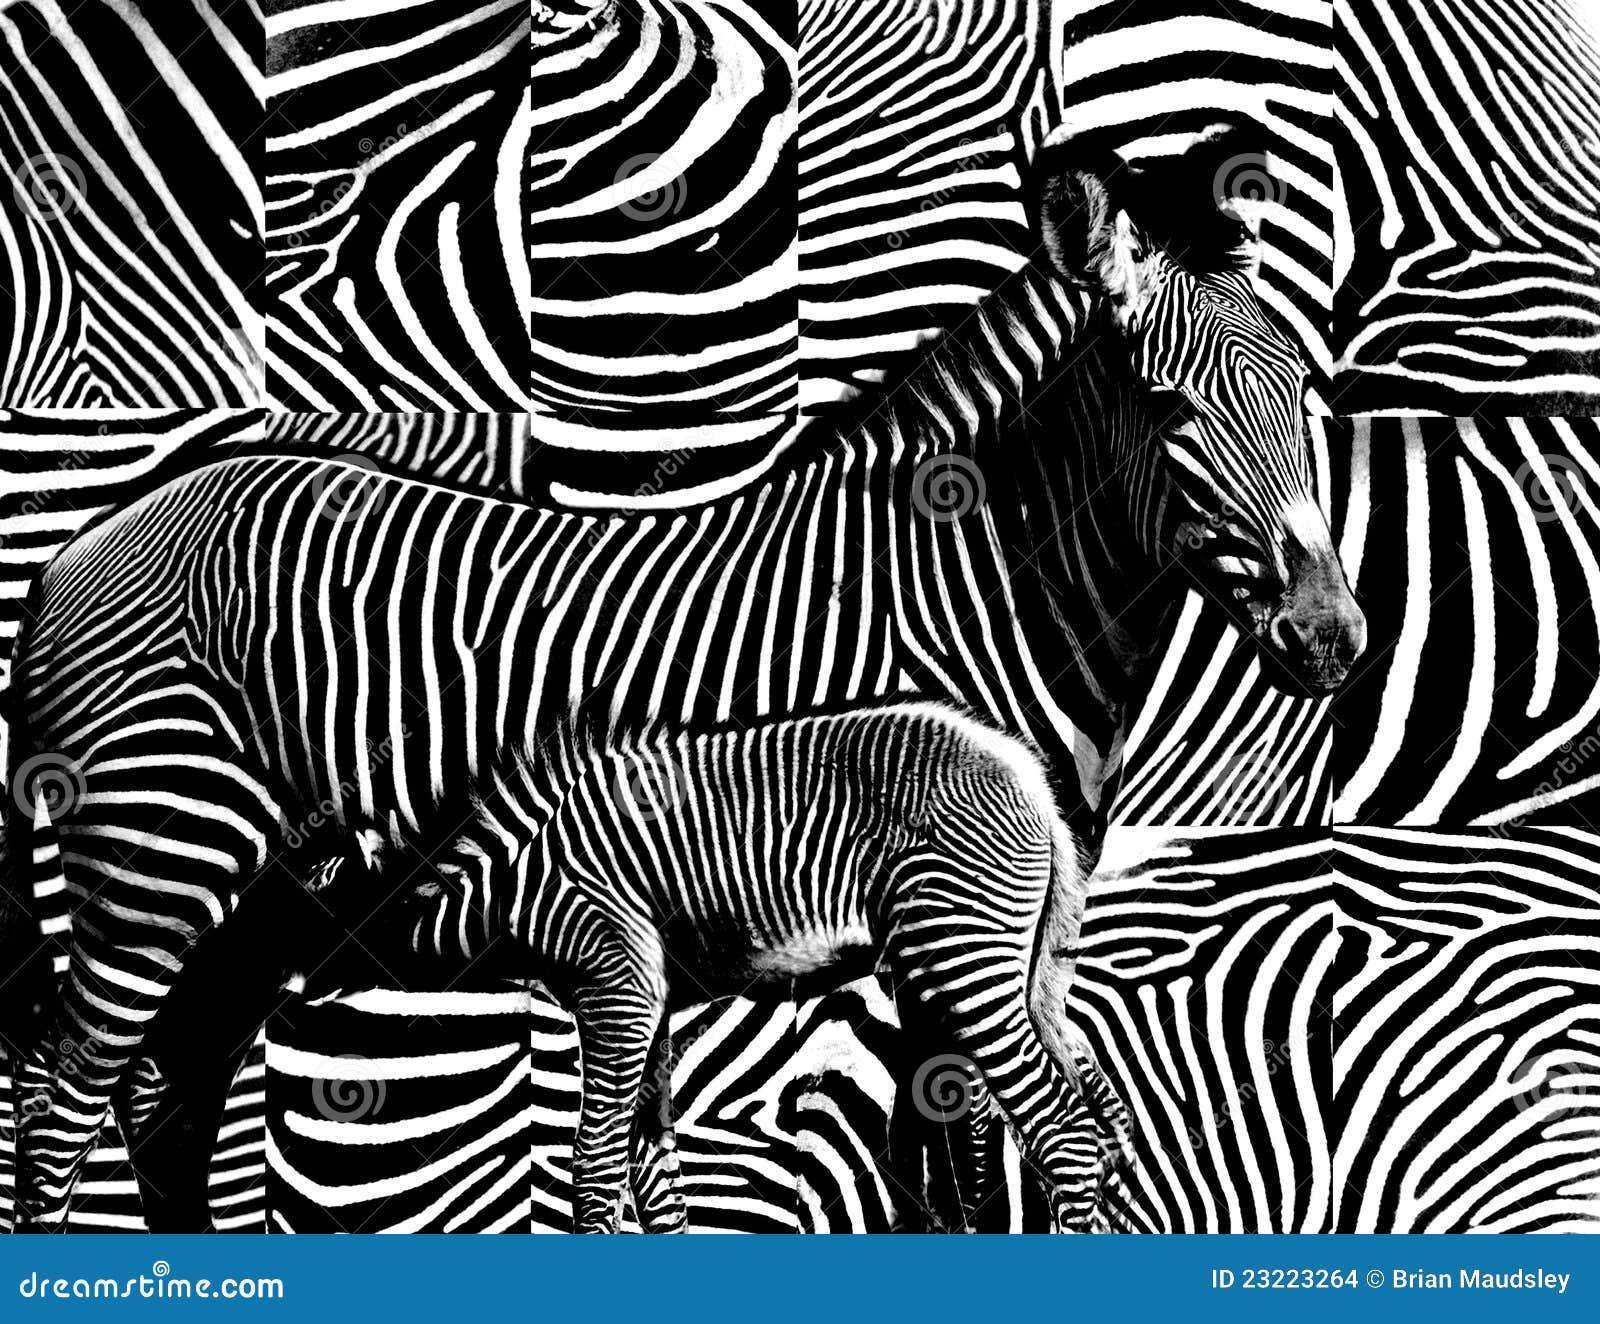 zebra skin pattern.